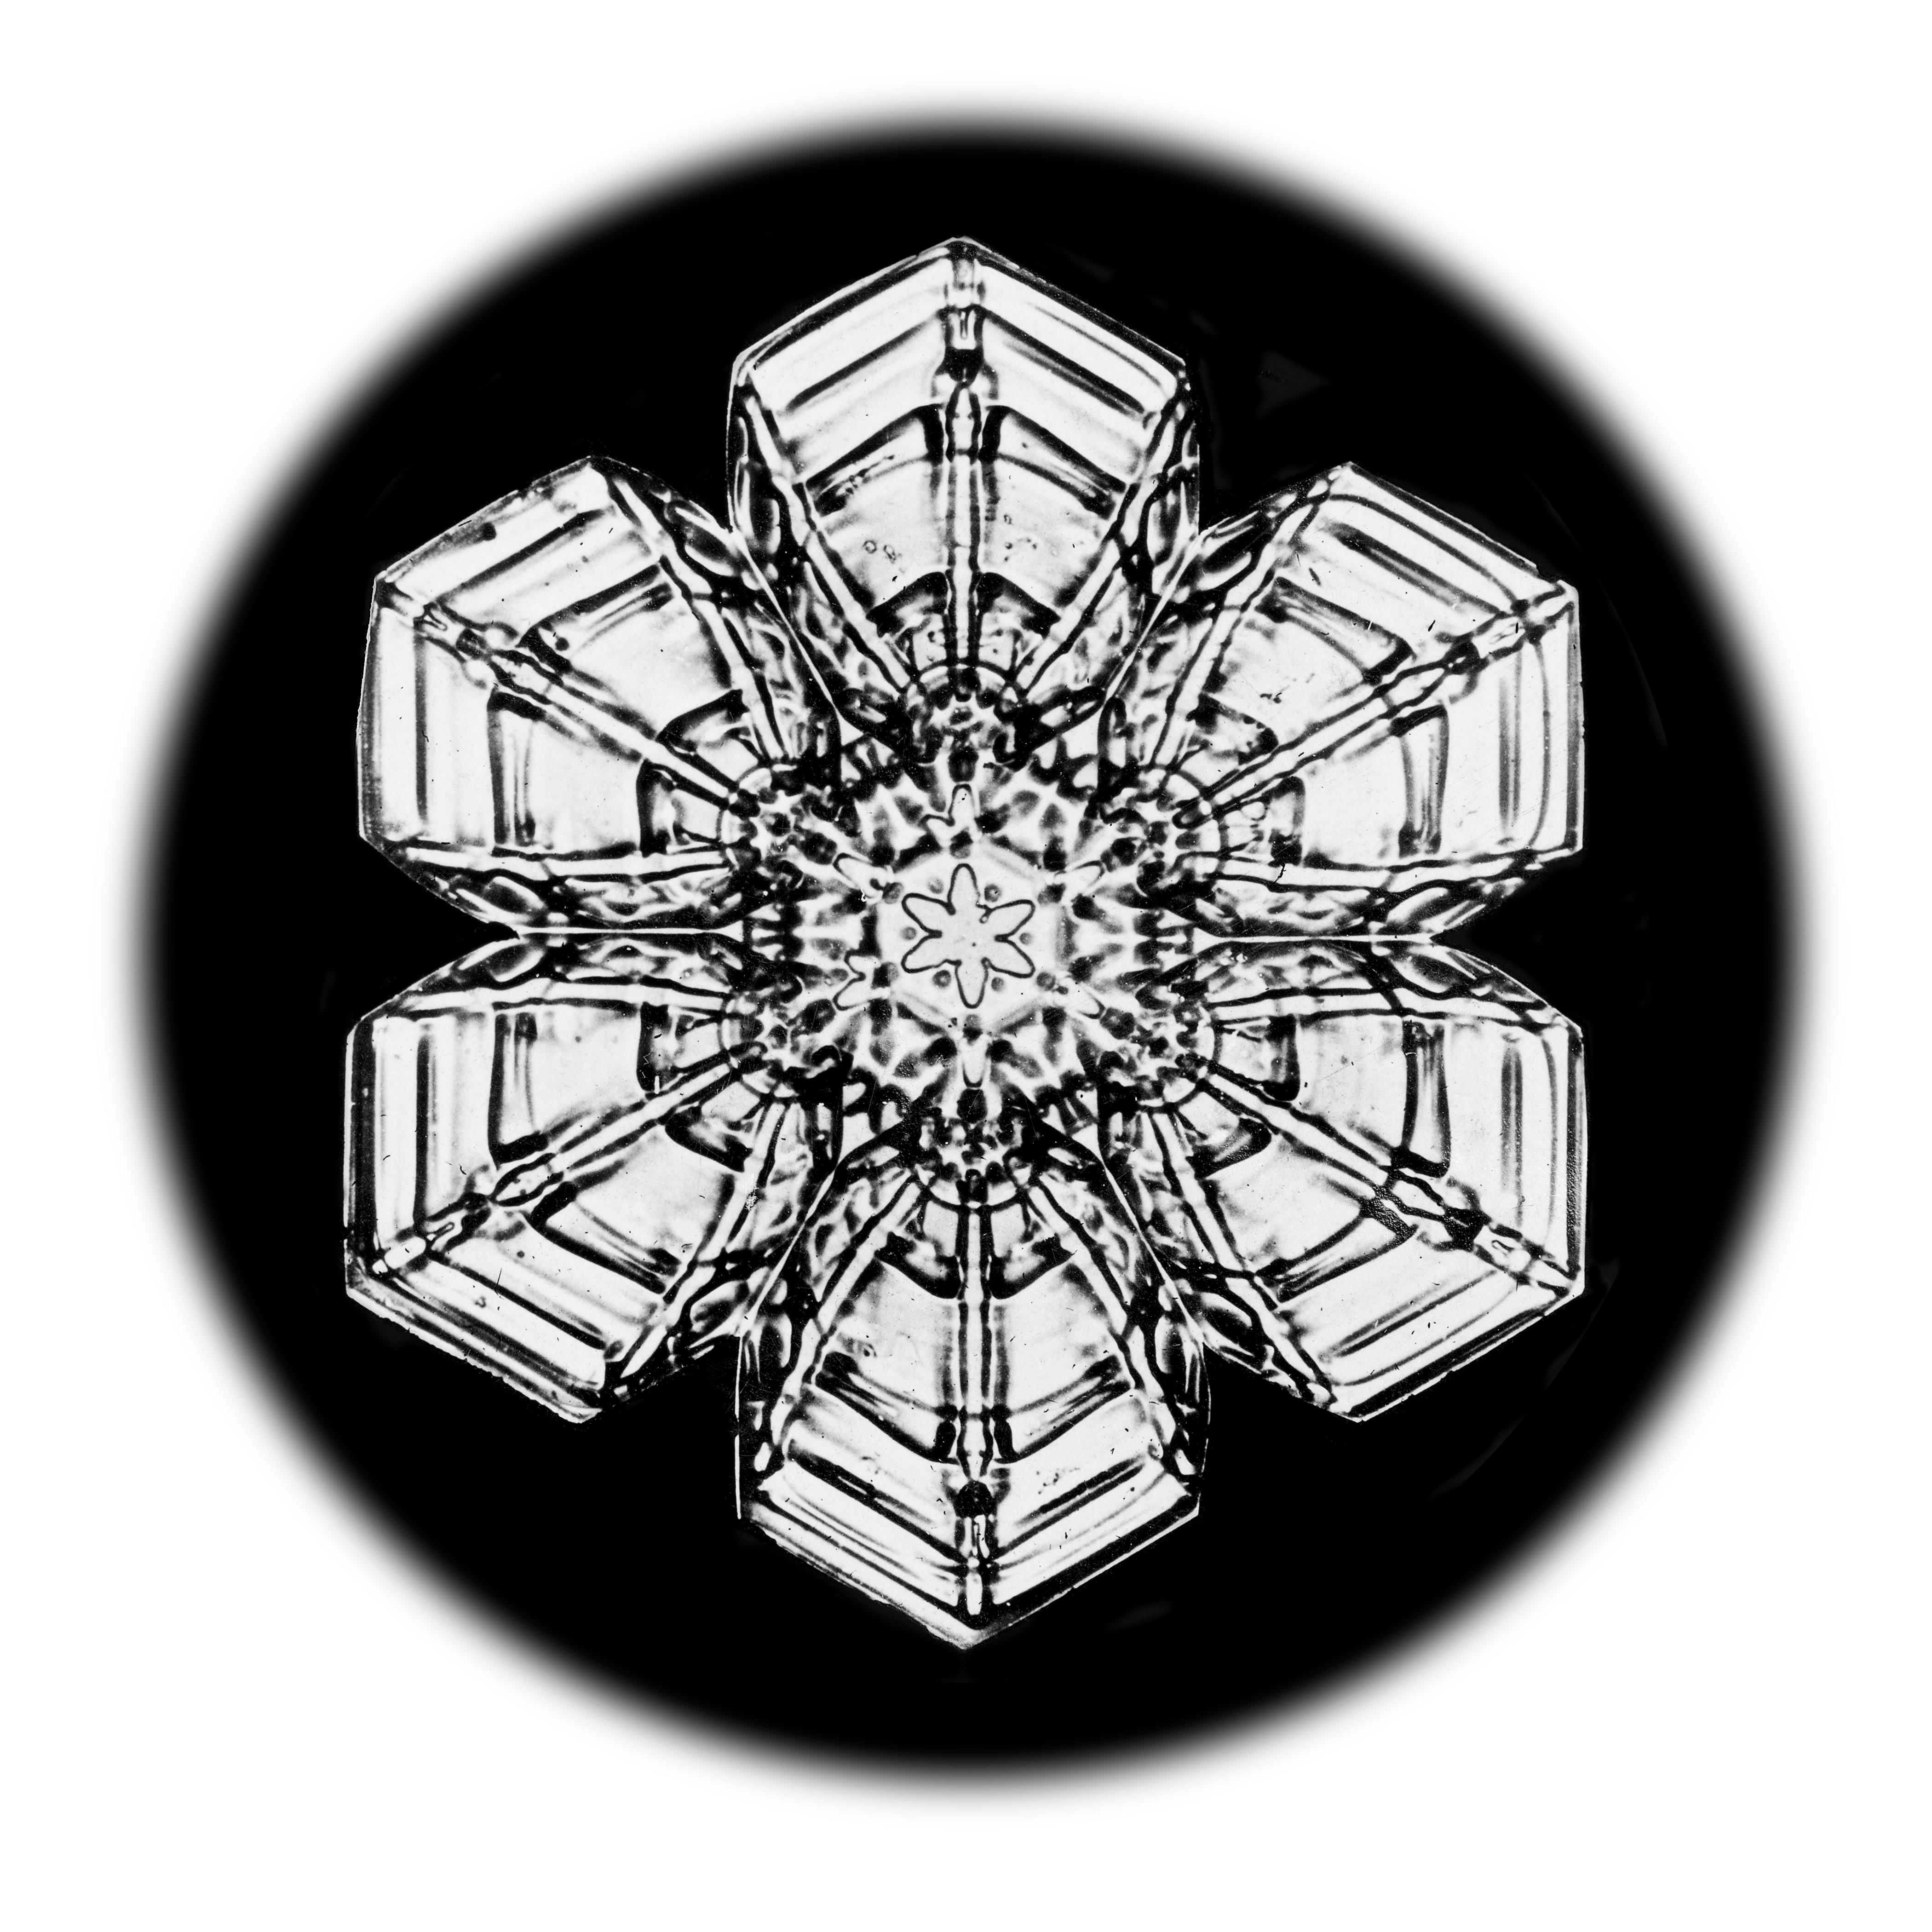 Wilson Bentley Black and White Photograph - Snowflake Microscopy 18